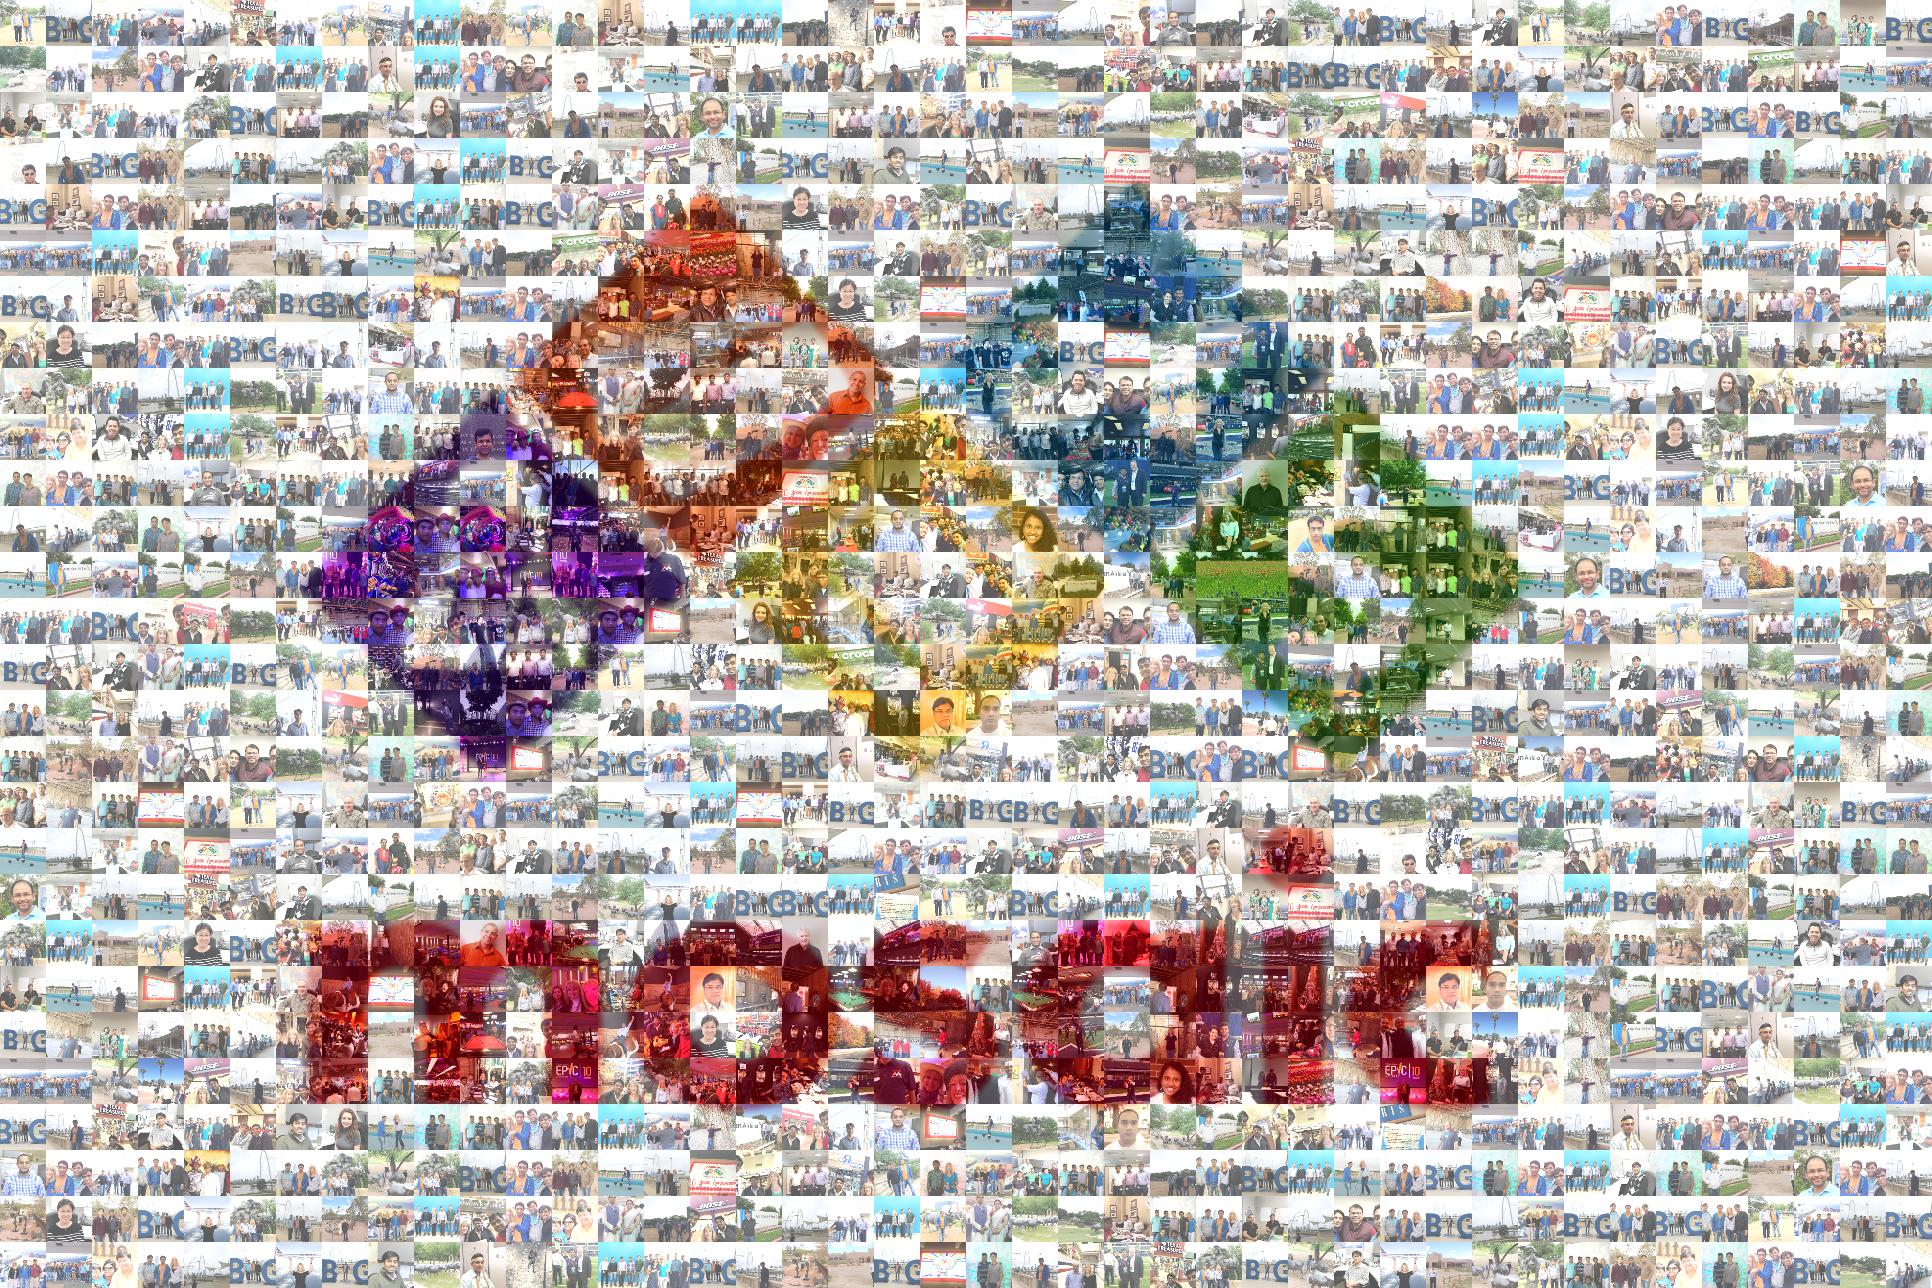 design a mosaic logo online free